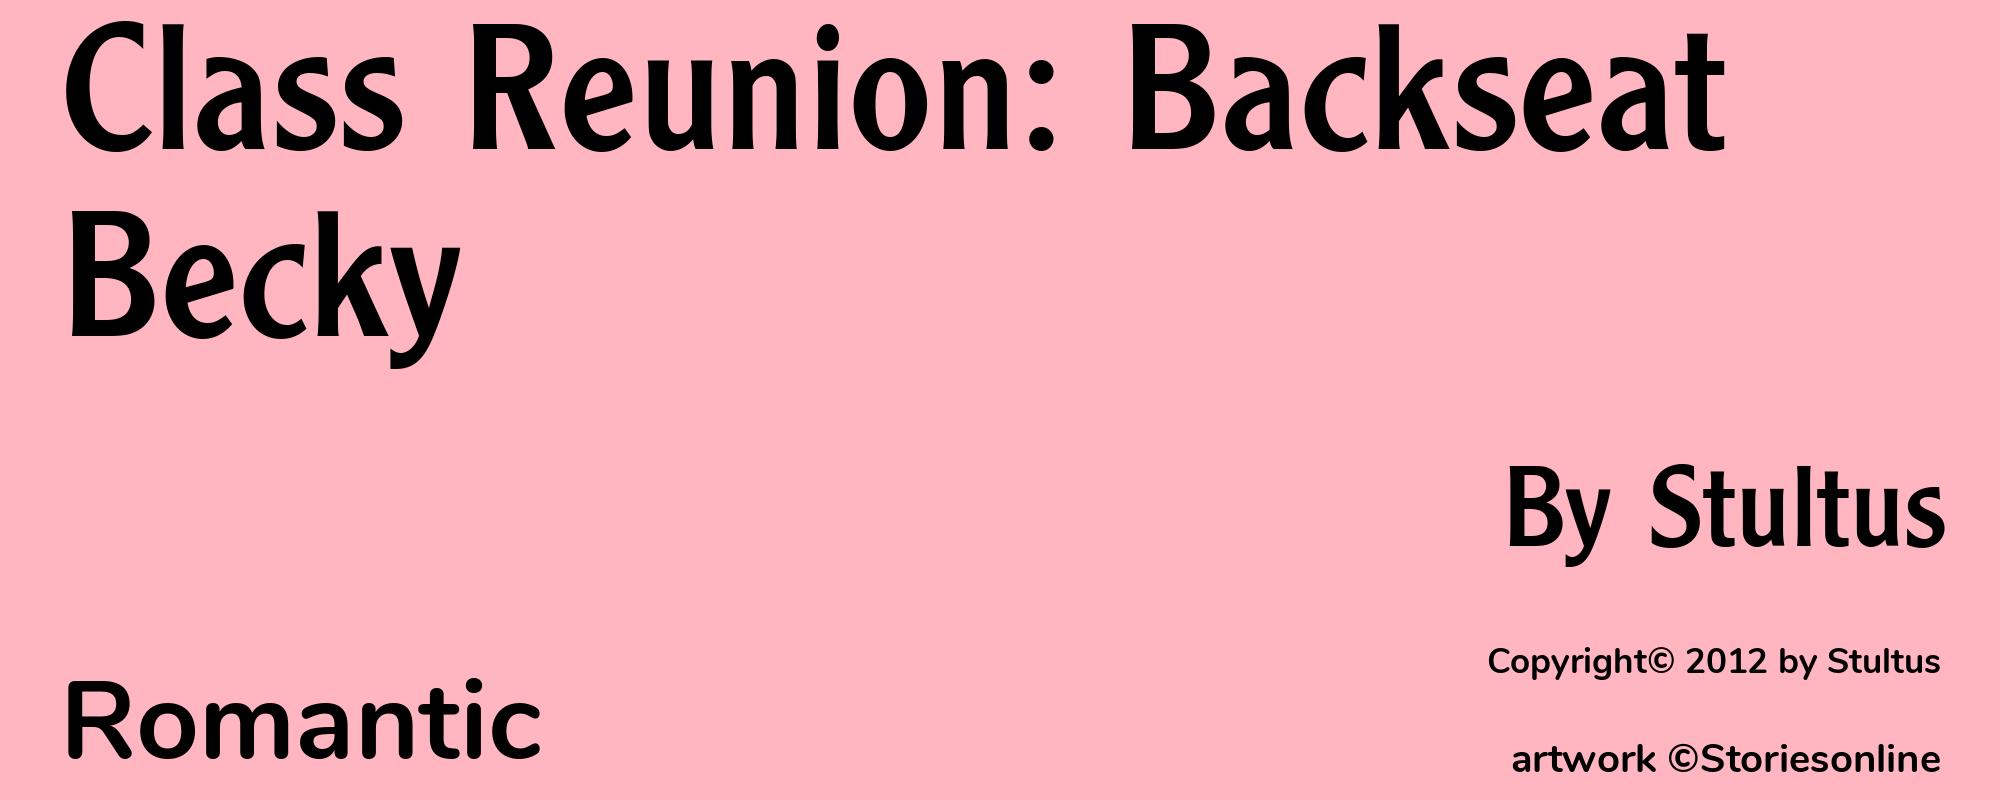 Class Reunion: Backseat Becky - Cover